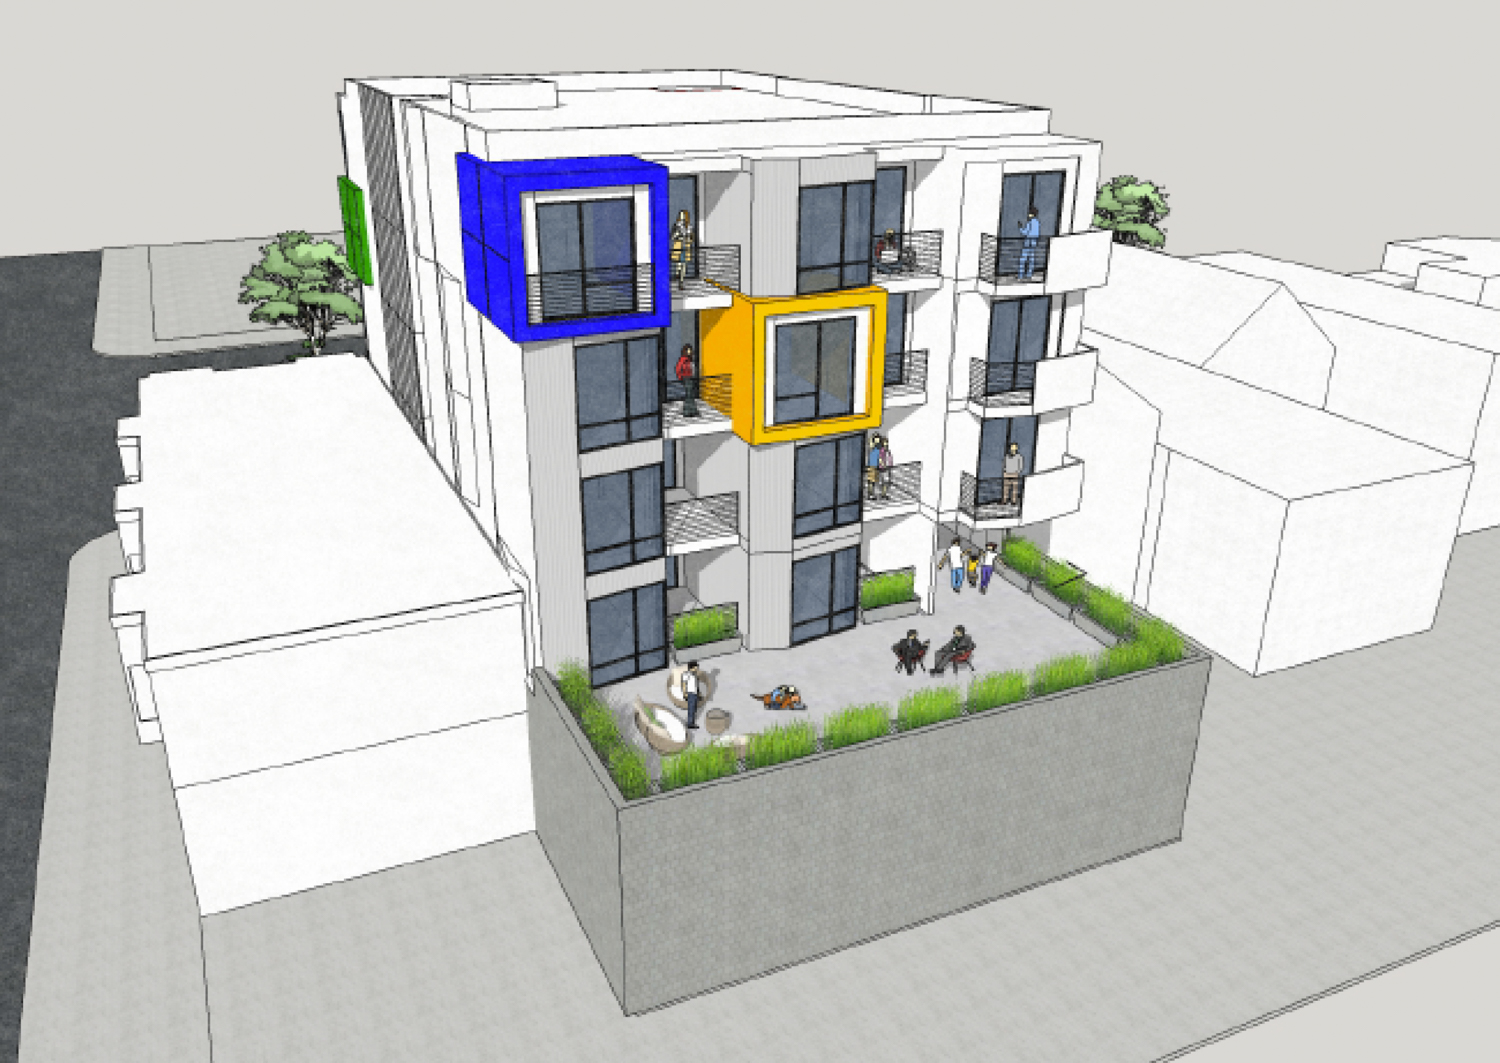 4110-4116 Geary Boulevard back courtyard, rendering by Derrick T. Wu Architect